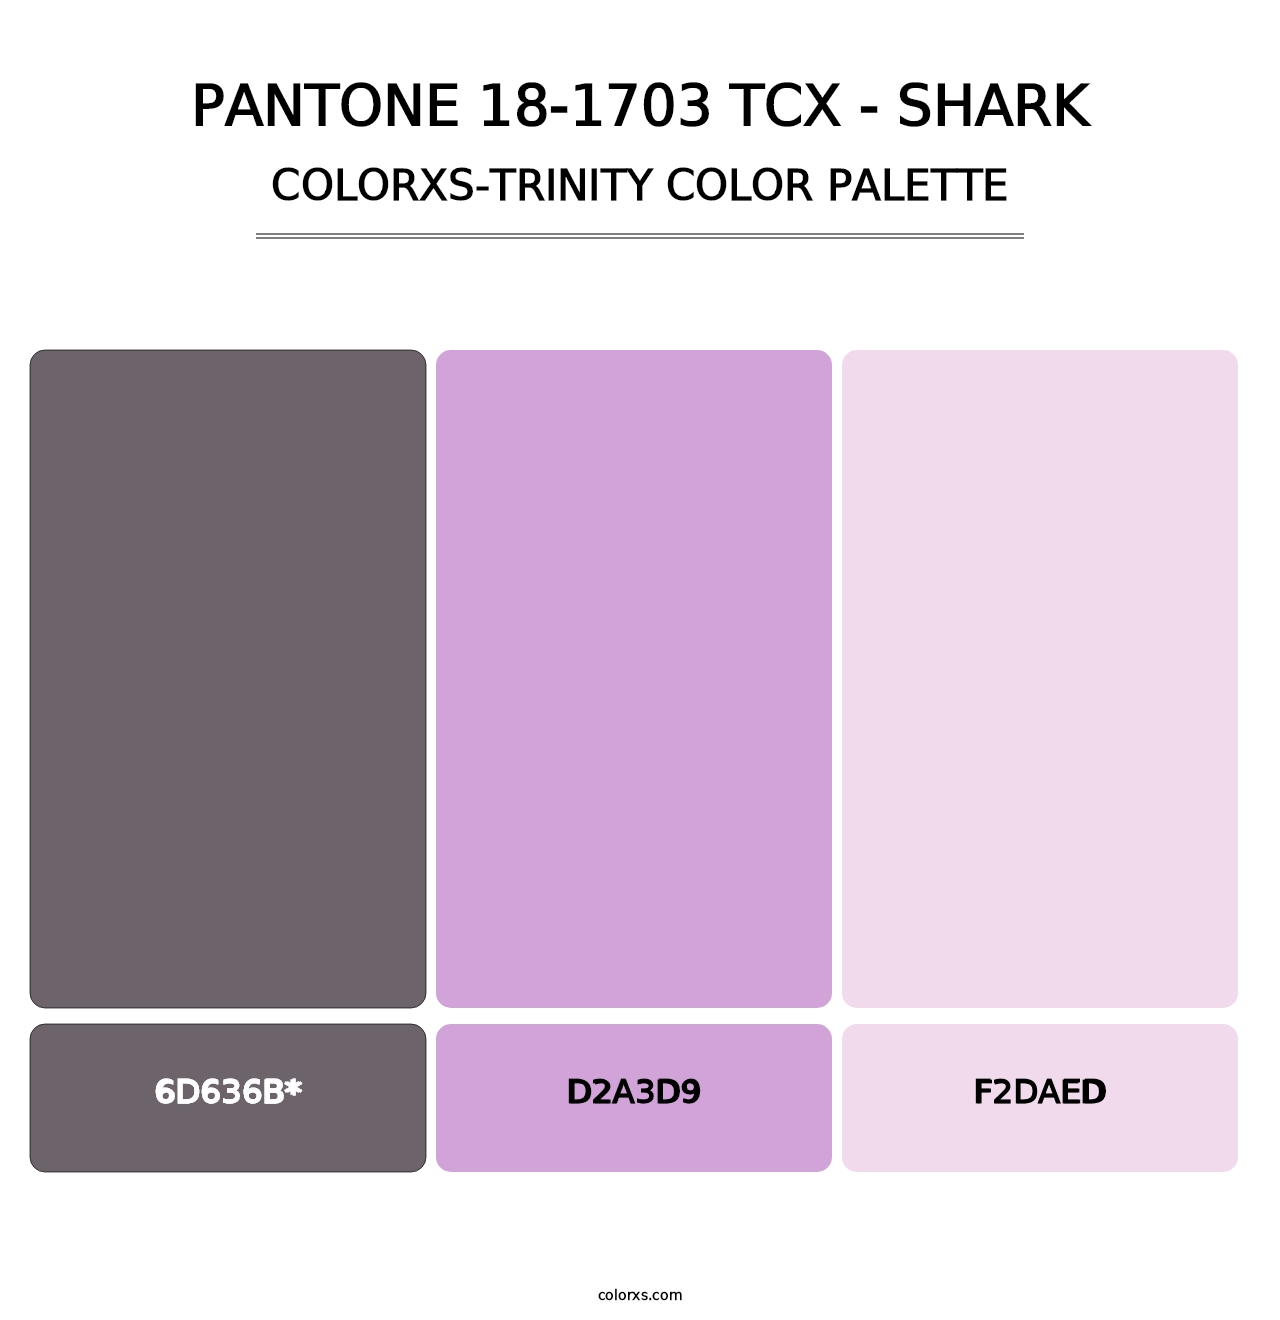 PANTONE 18-1703 TCX - Shark - Colorxs Trinity Palette